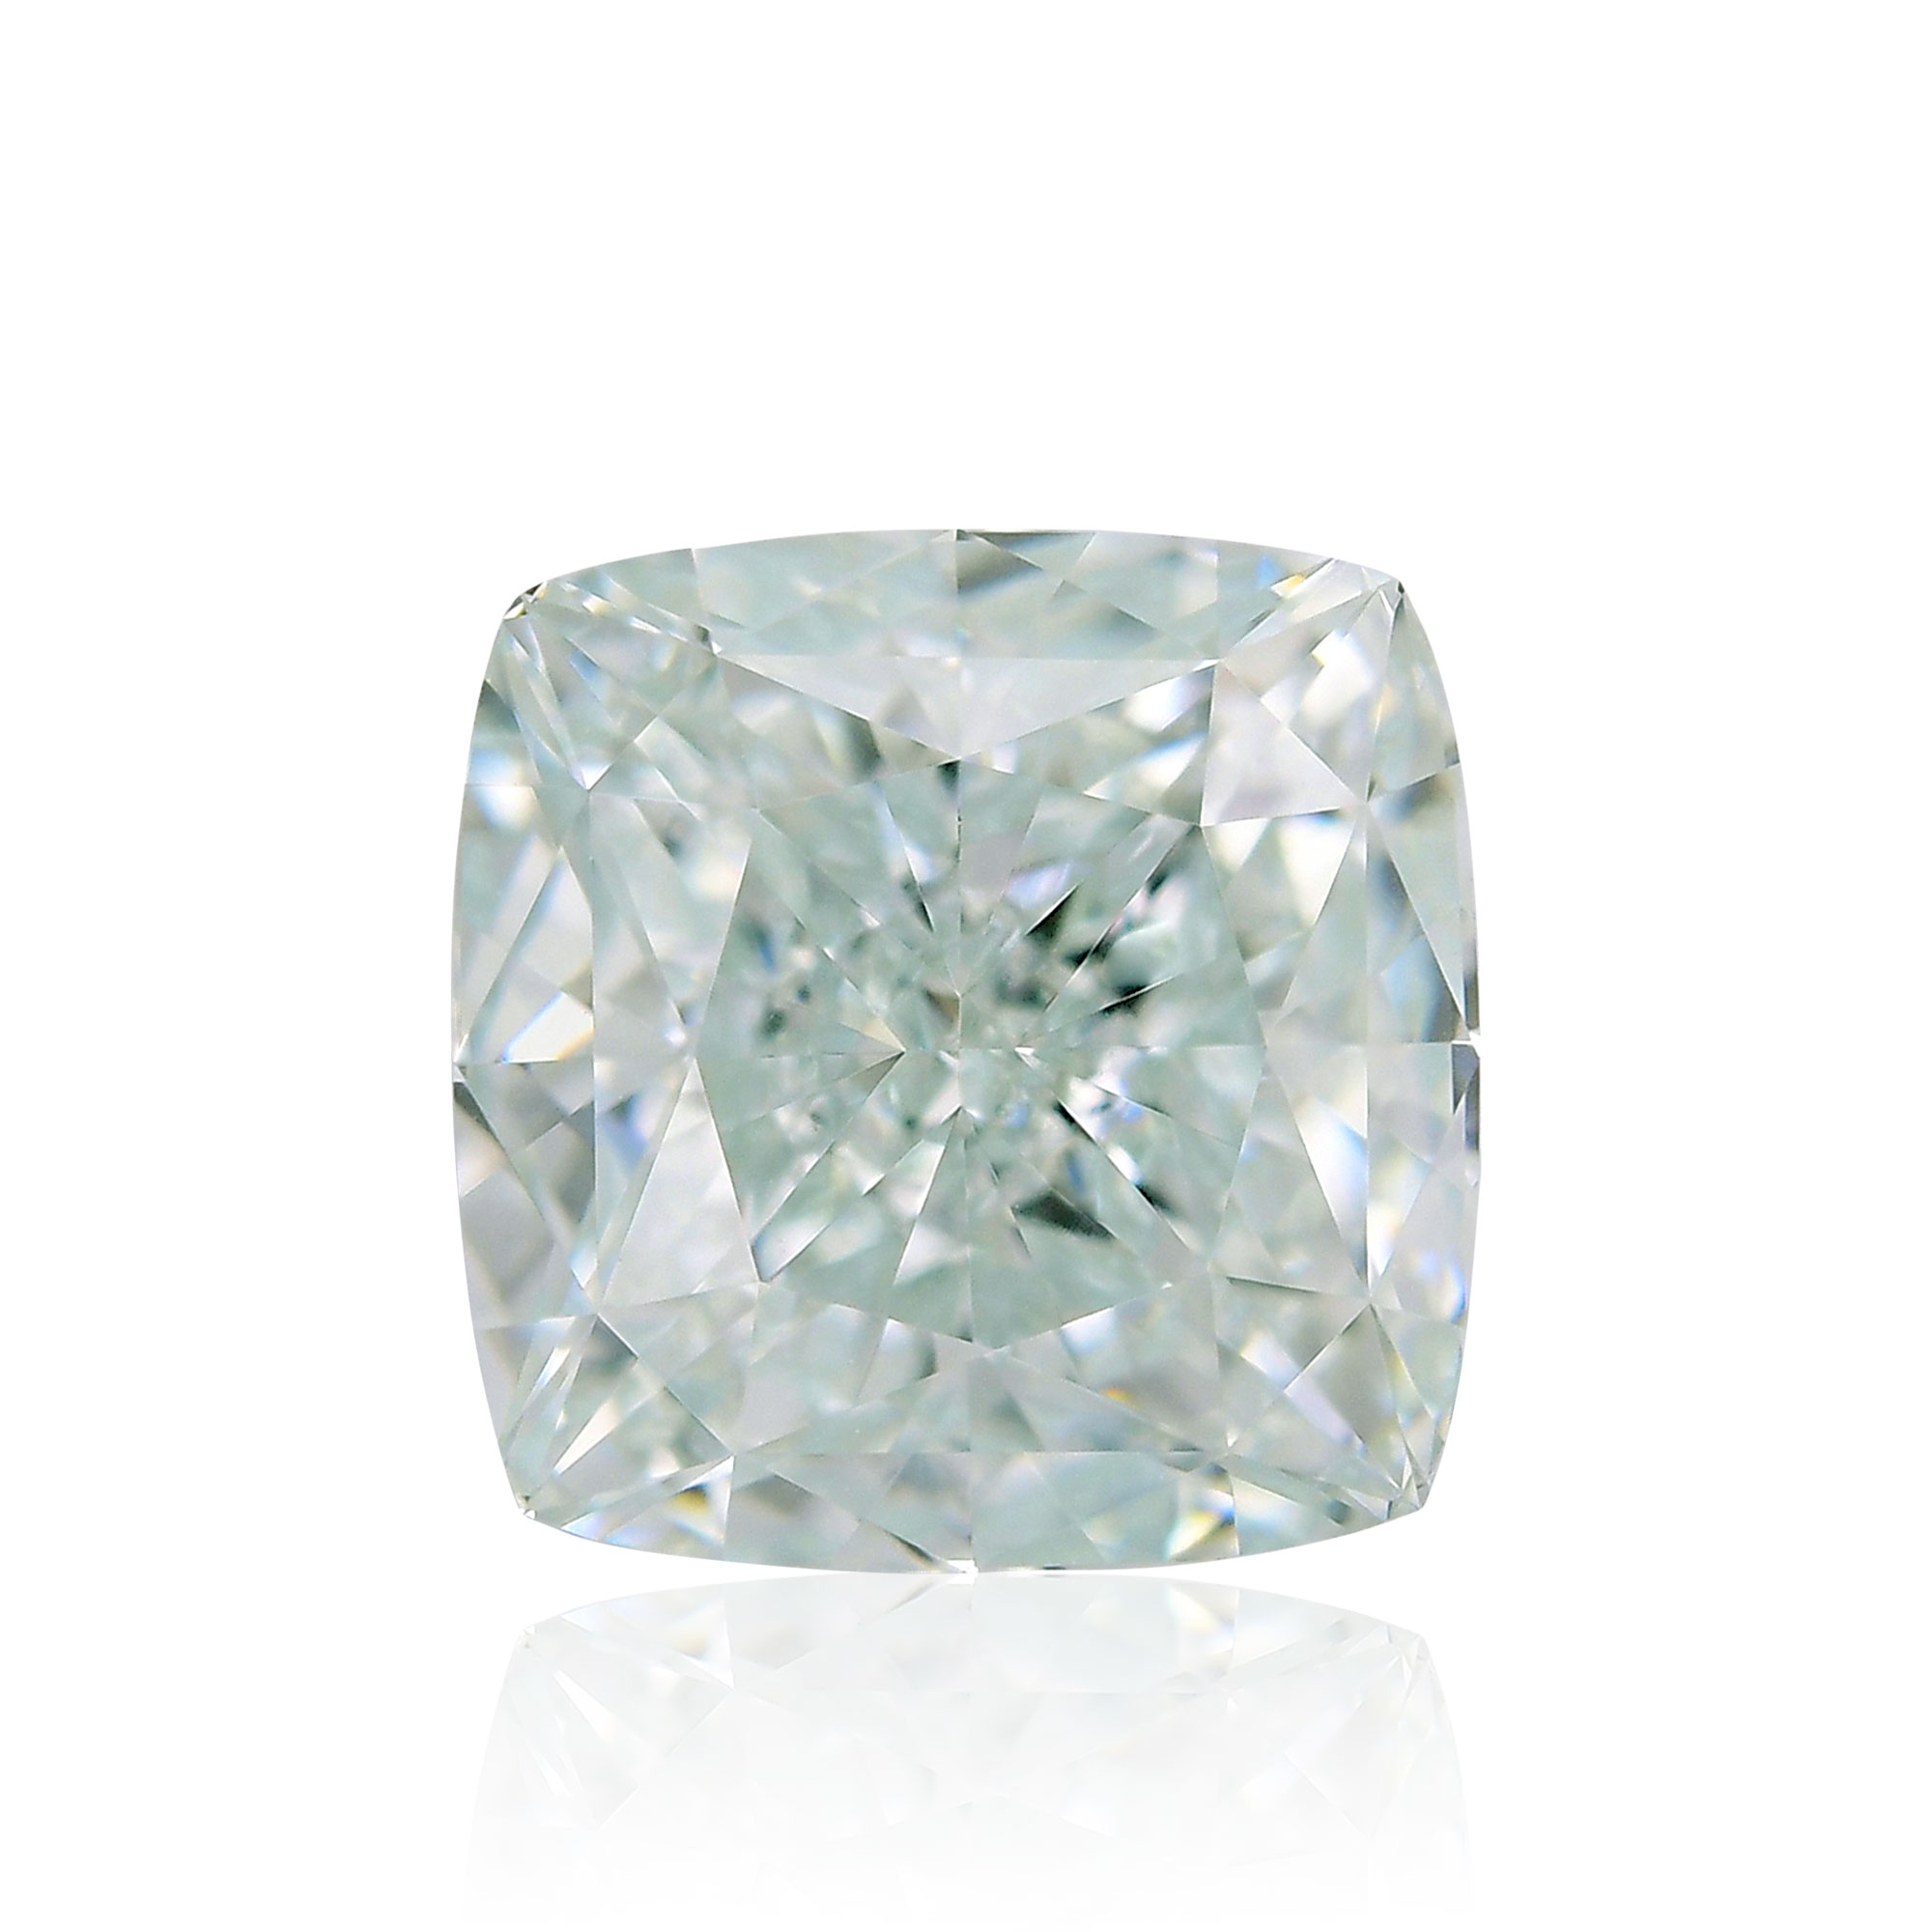 Fancy Light Bluish Green Diamond